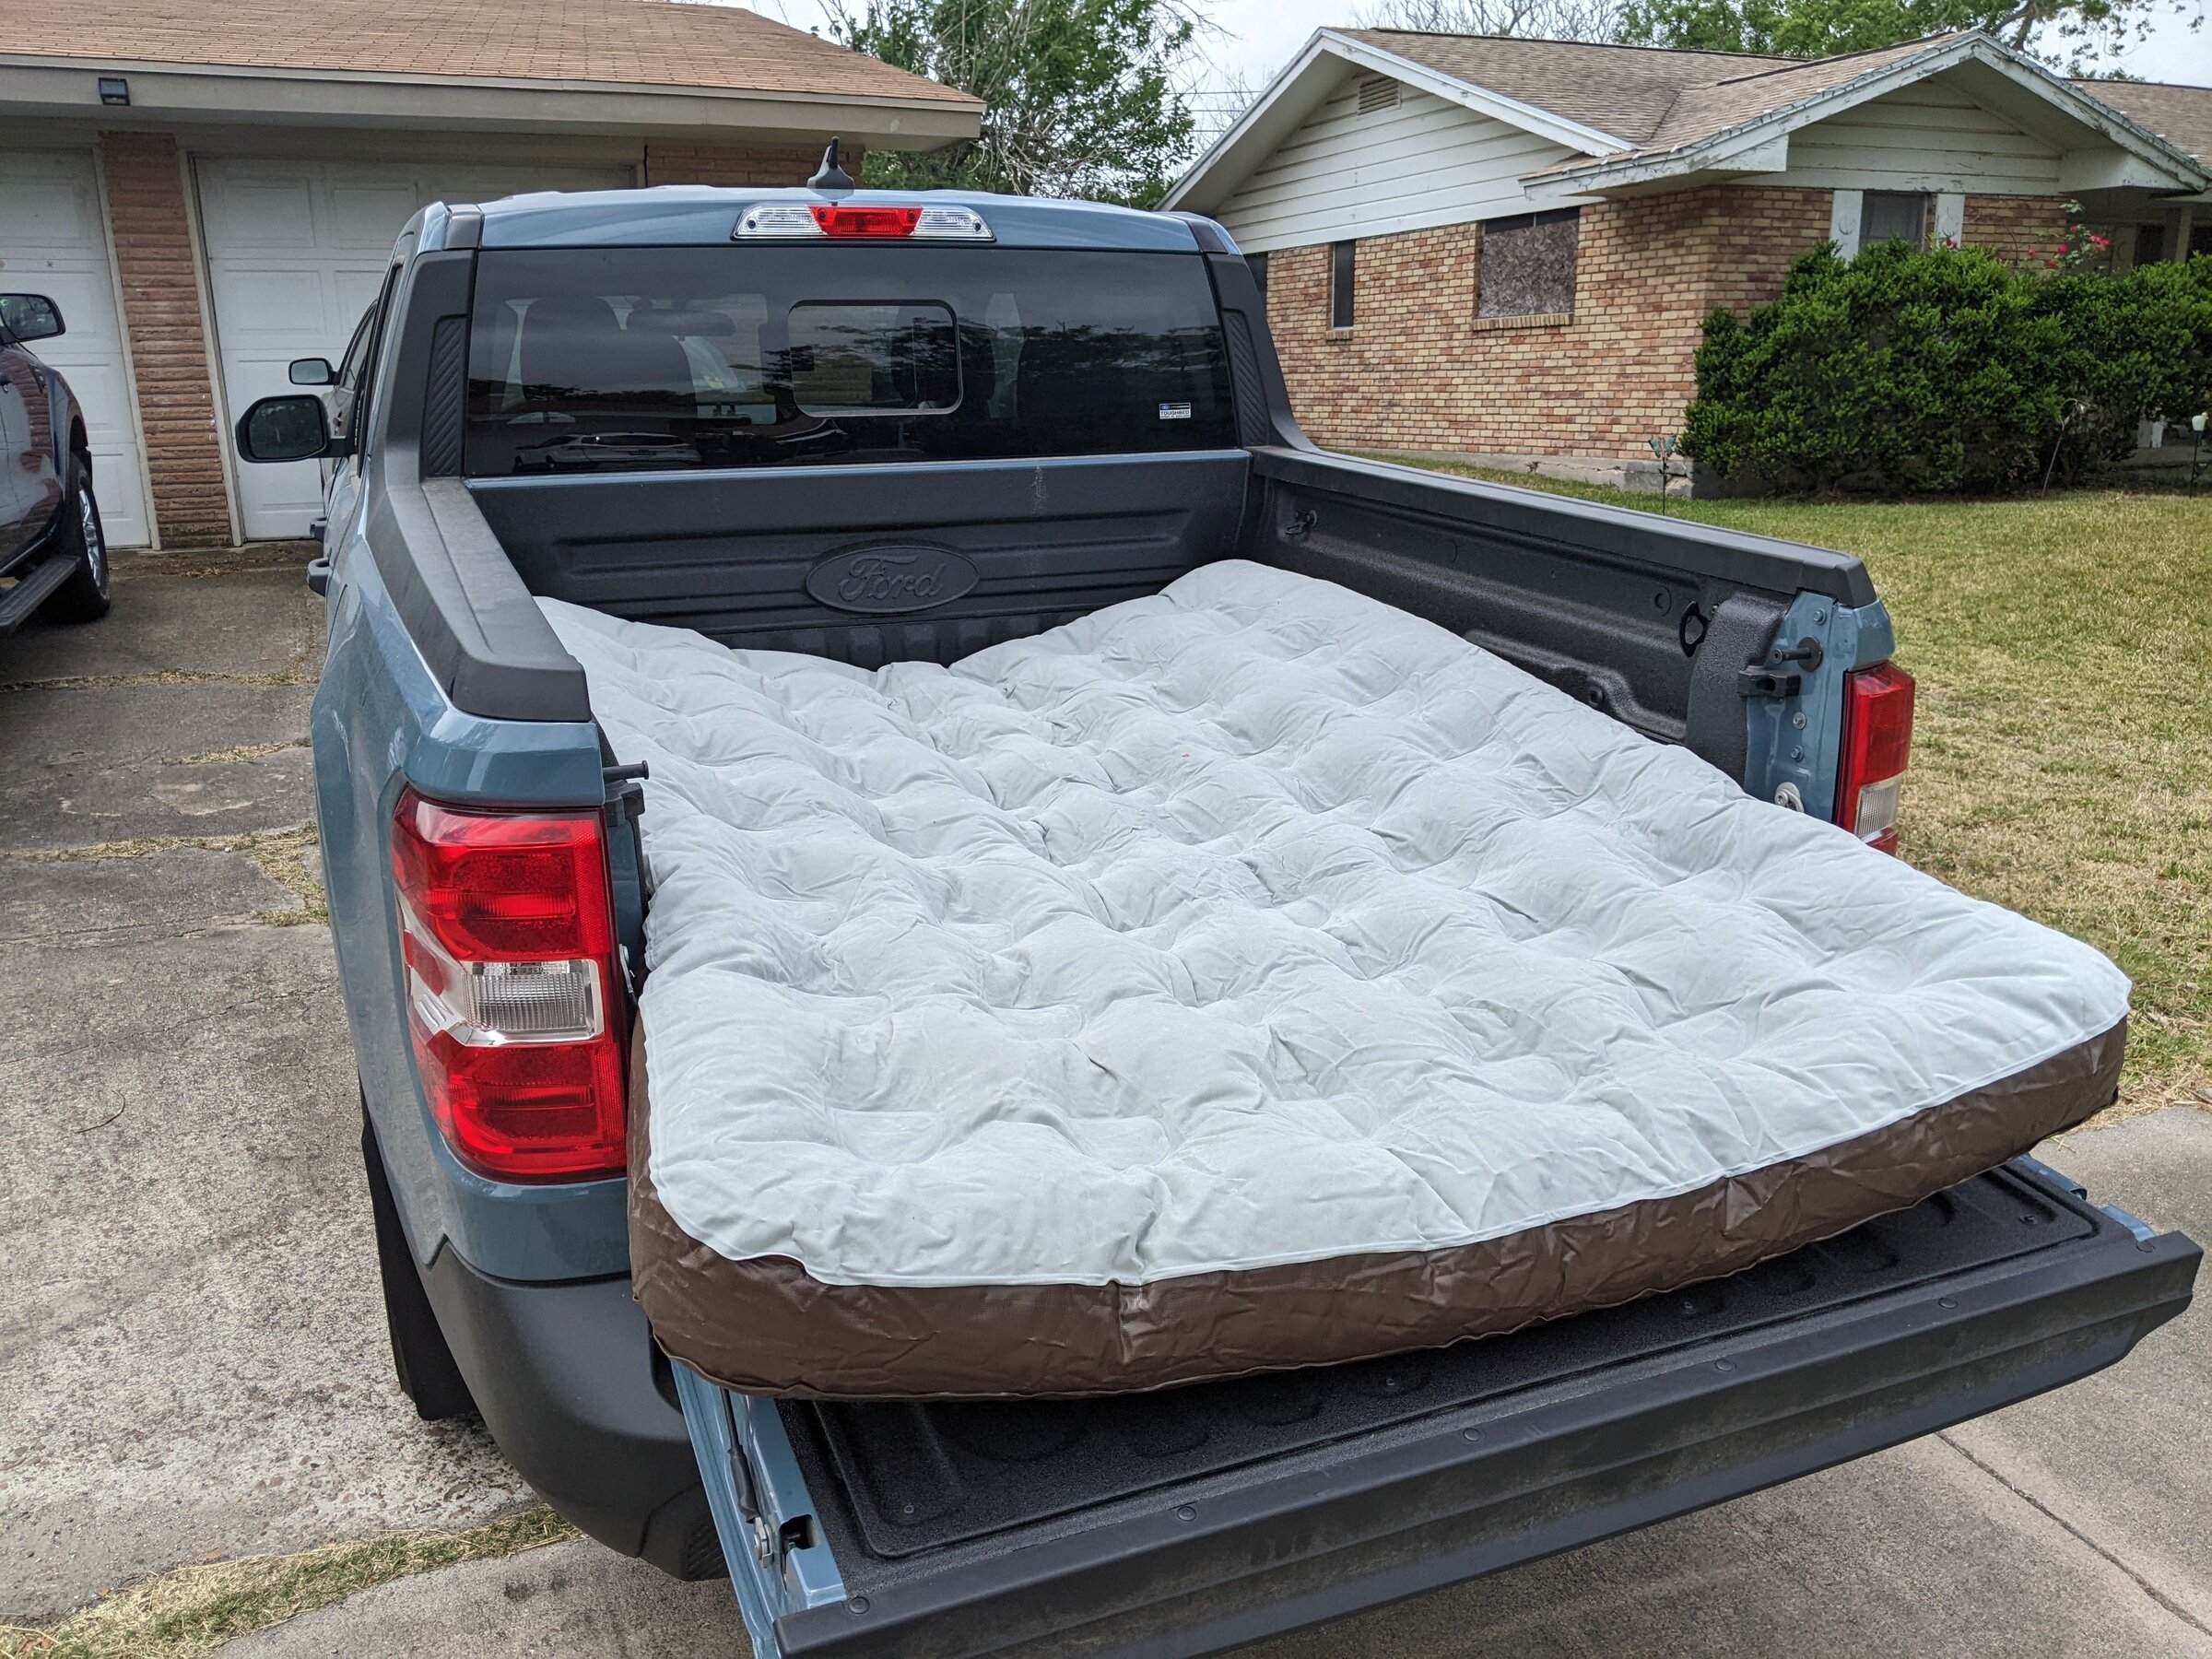 will a queen mattress fit in a suburban